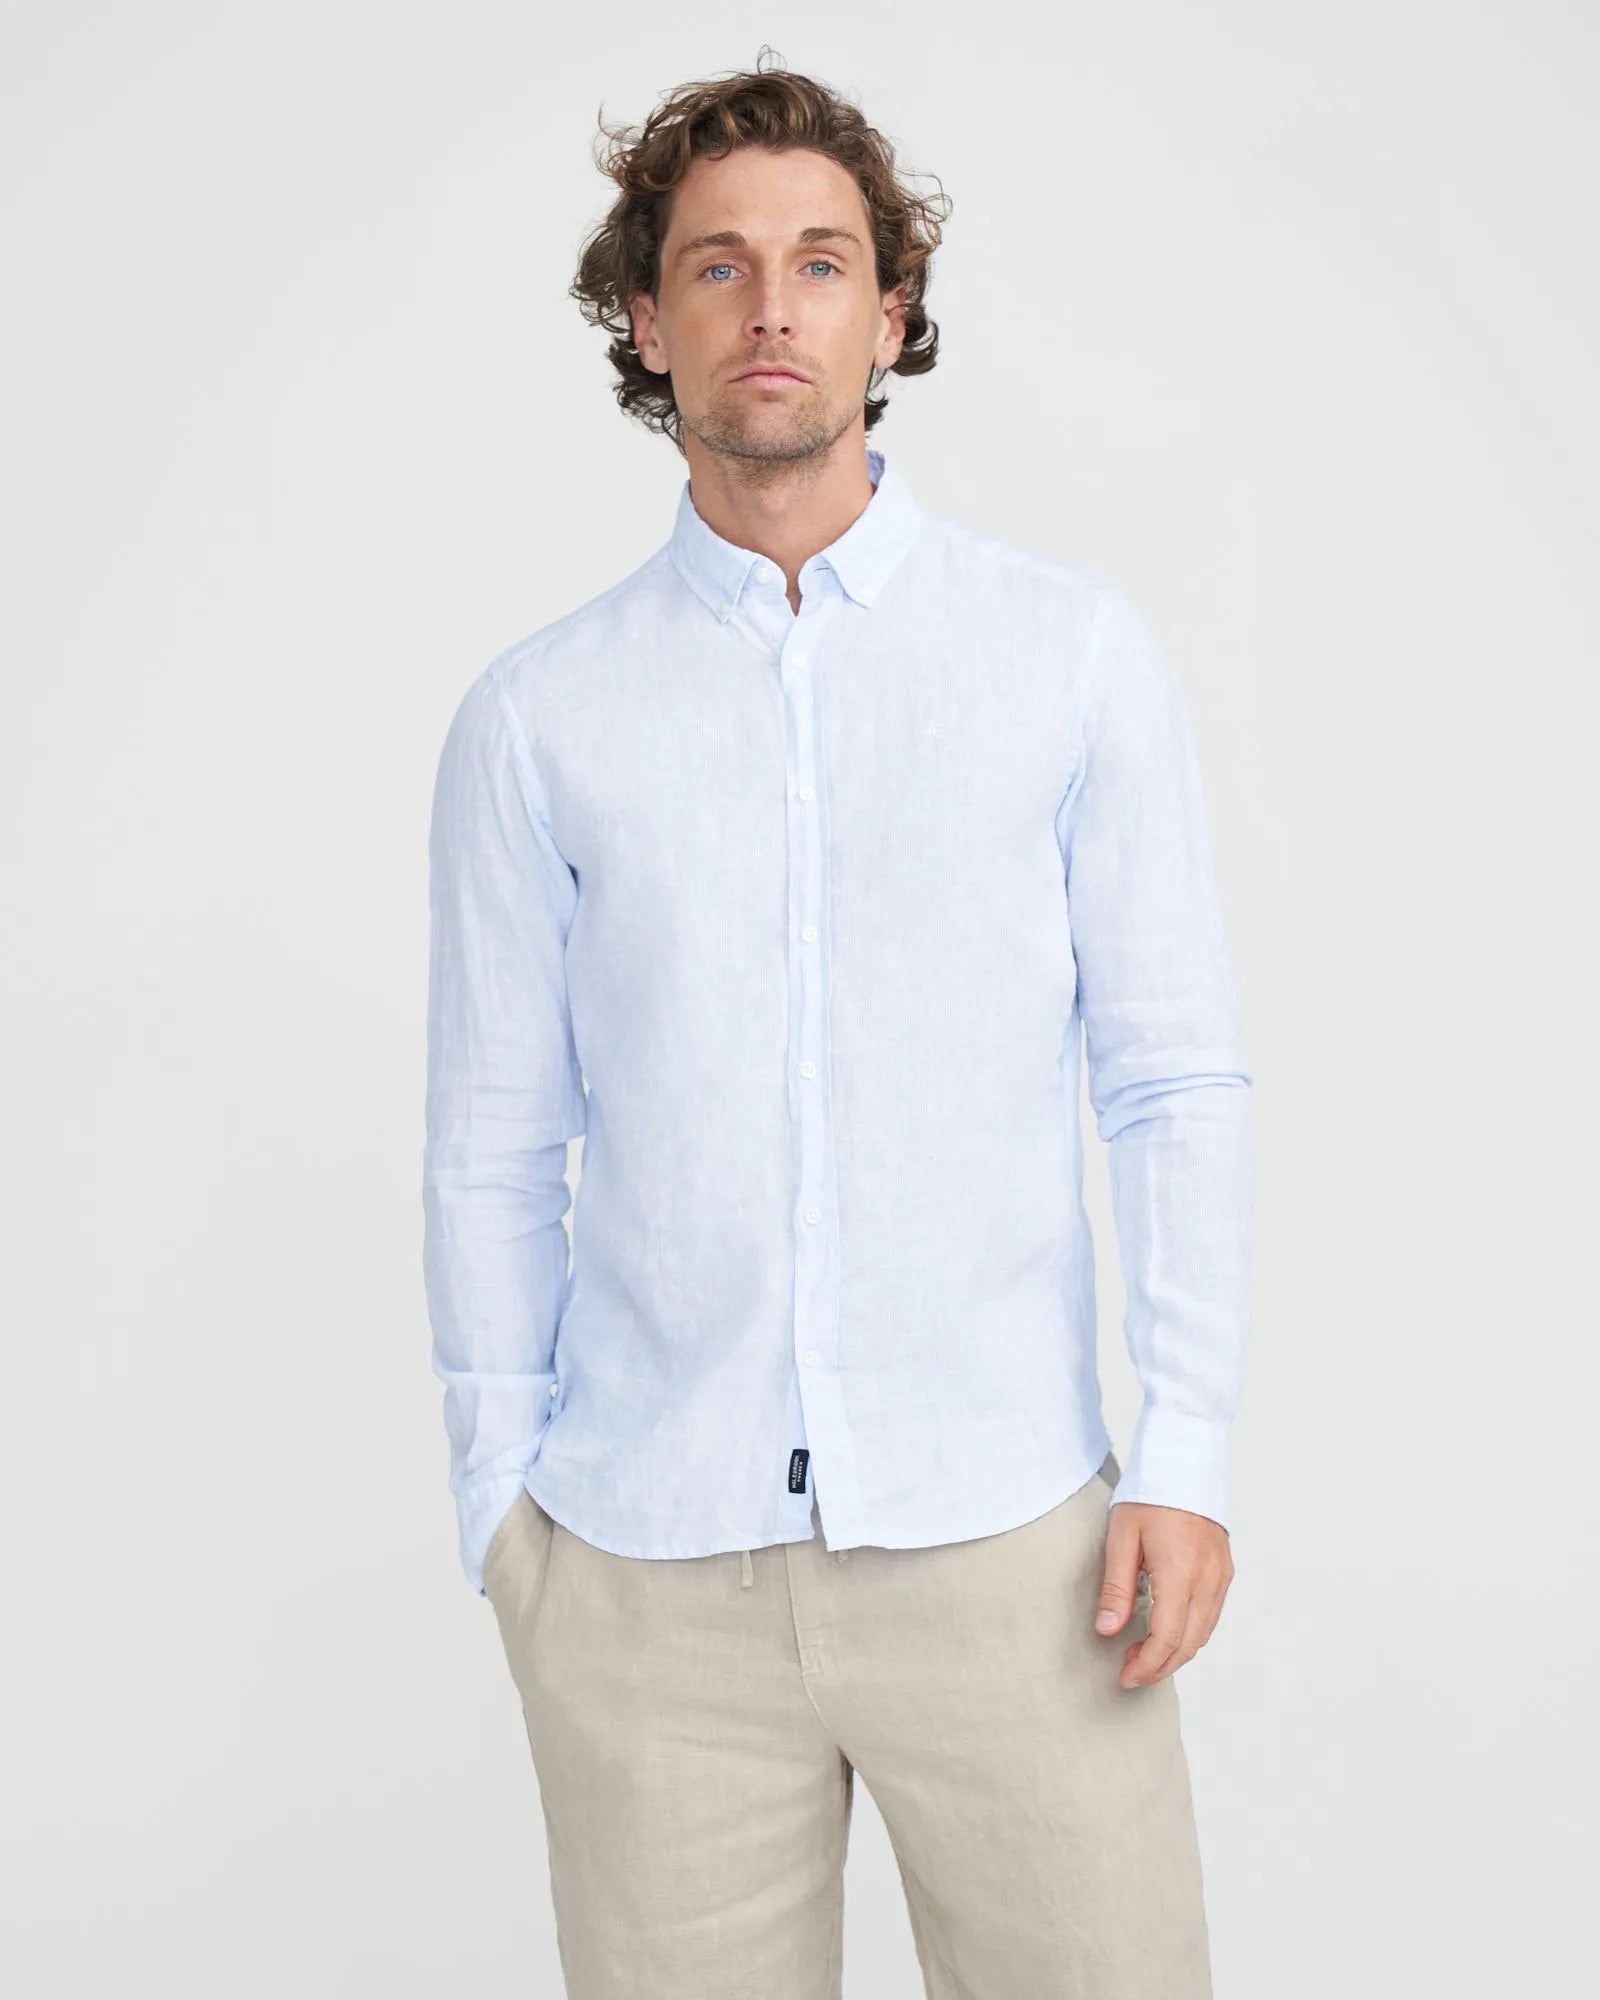 Markus Classic Fit Button Down Shirt - White/Light Blue